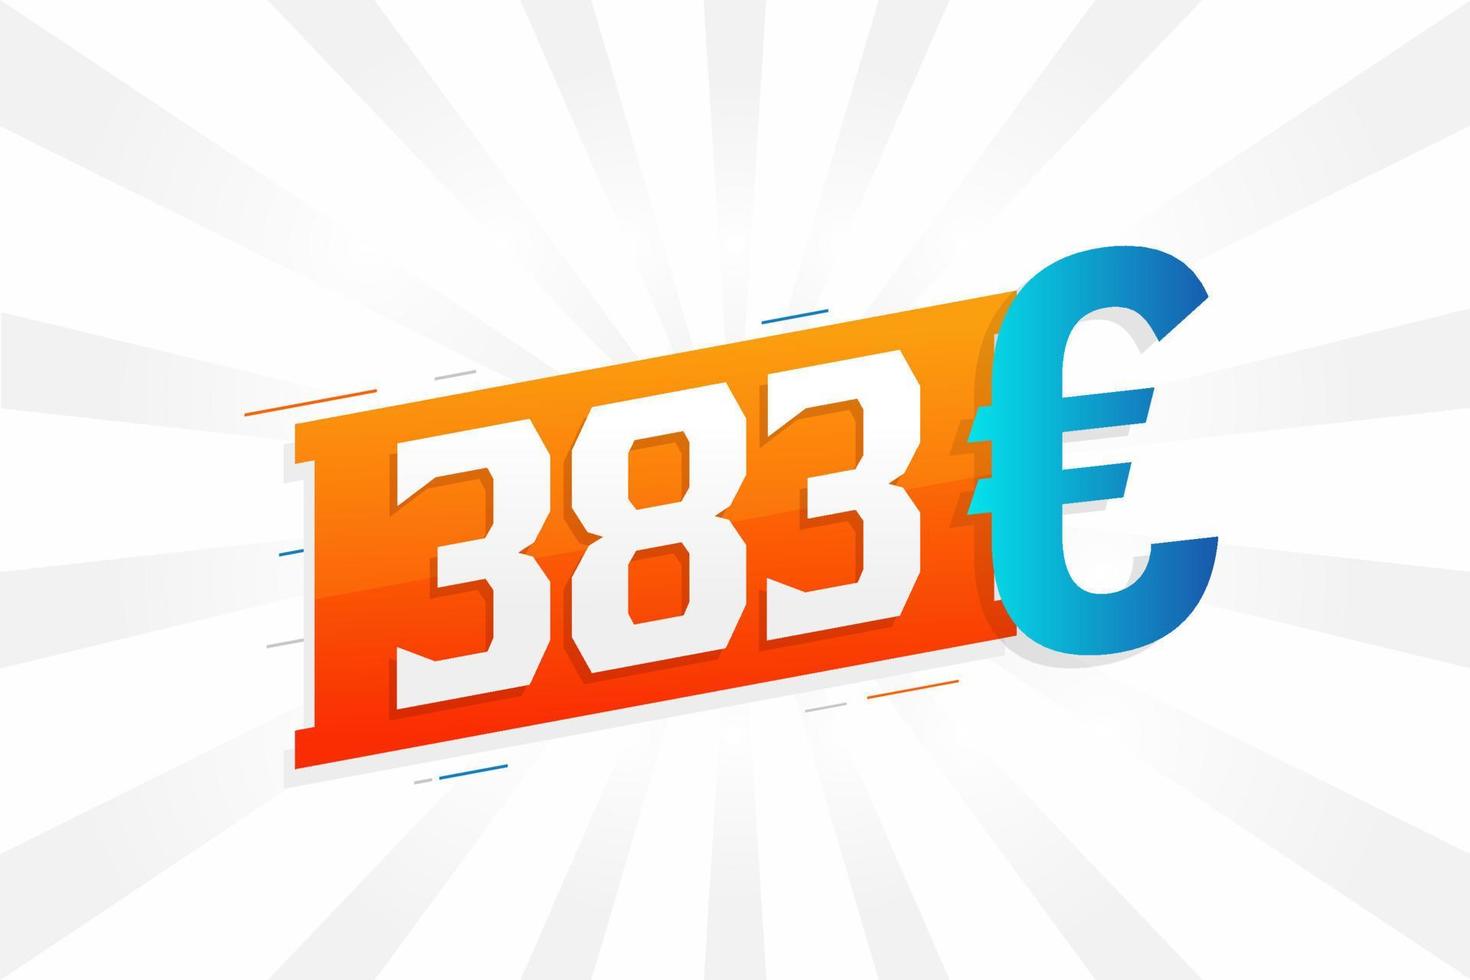 Símbolo de texto vectorial de moneda de 383 euros. 383 euro vector de stock de dinero de la unión europea